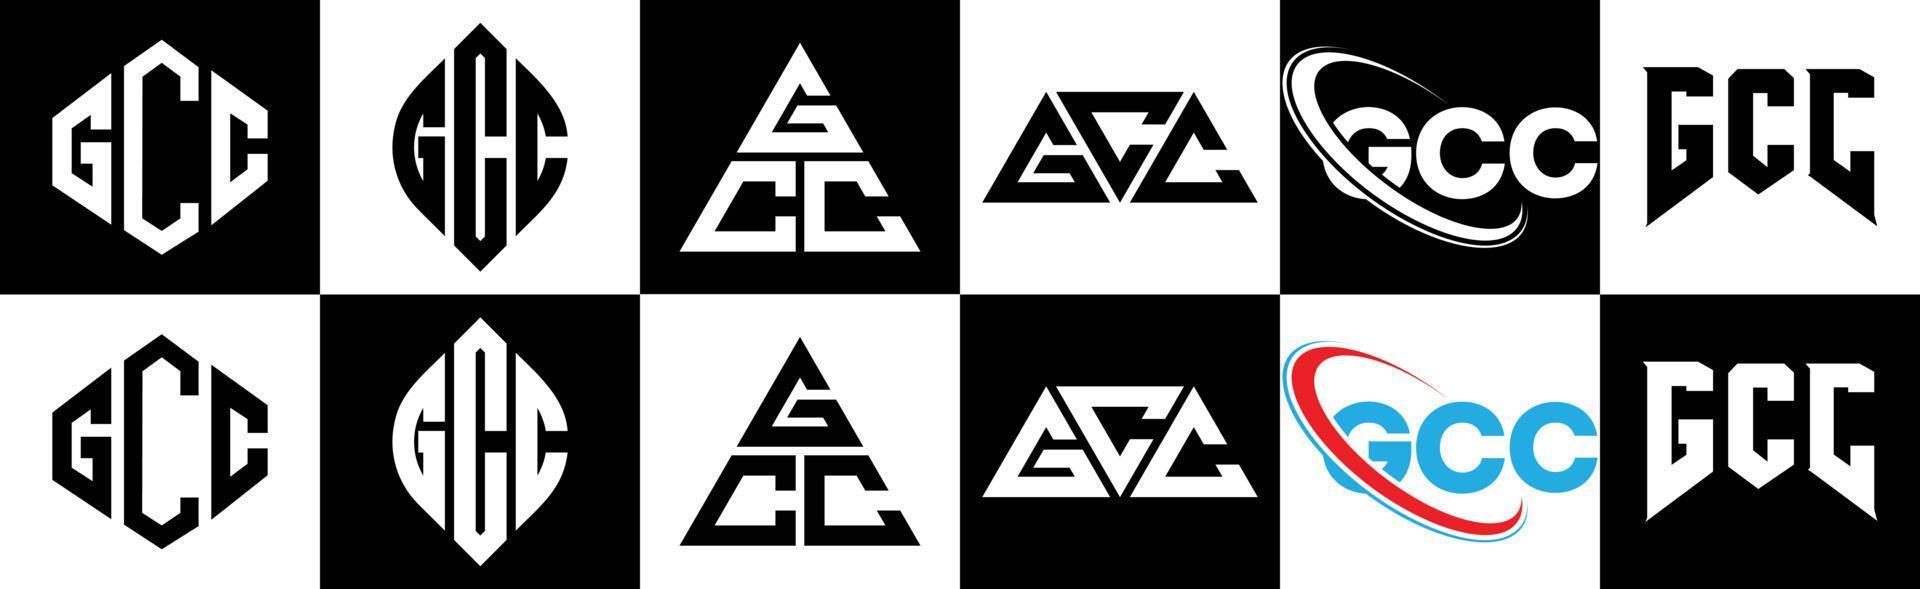 design de logotipo de carta gcc em seis estilos. gcc polígono, círculo, triângulo, hexágono, estilo plano e simples com logotipo de carta de variação de cor preto e branco definido em uma prancheta. gcc logotipo minimalista e clássico vetor